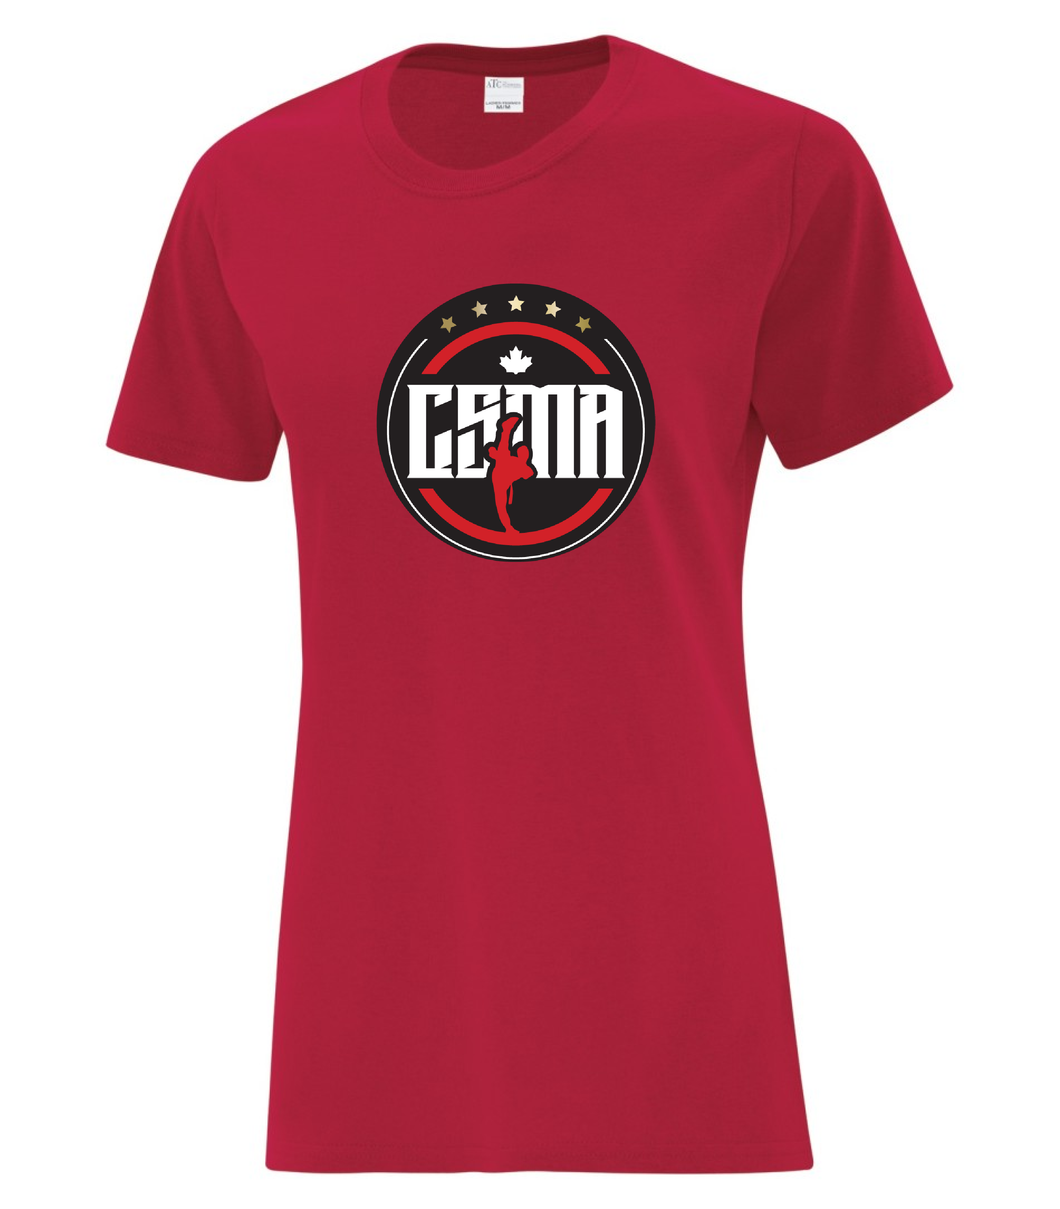 Red Women's T-Shirt - CSMA logo